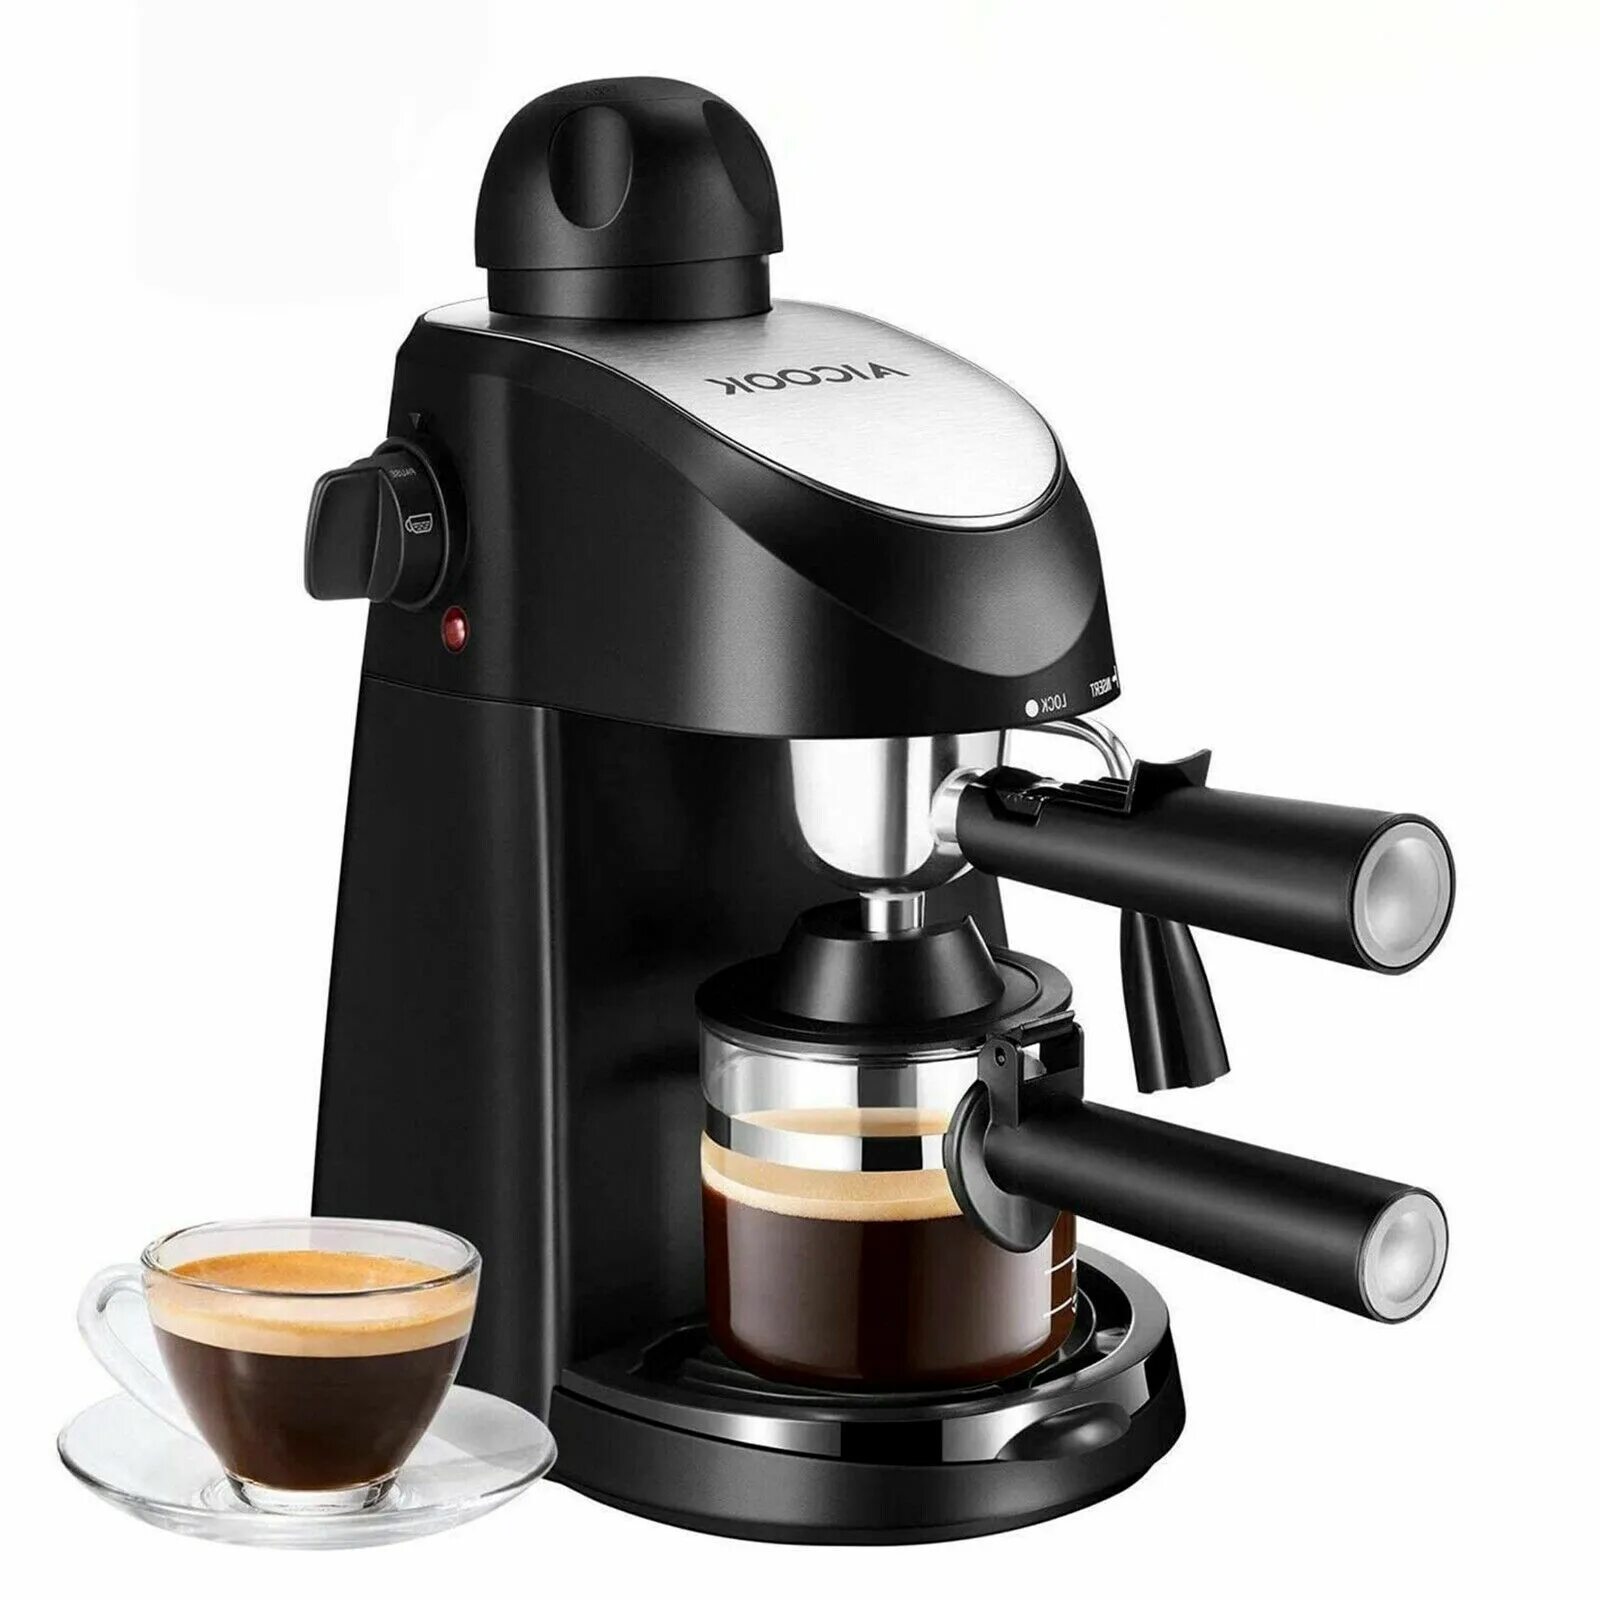 Кофемашина Espresso Cappuccino. Кофемашина Espresso Coffee maker. Espresso Machine от 9barista. Steam Espresso кофеварка.